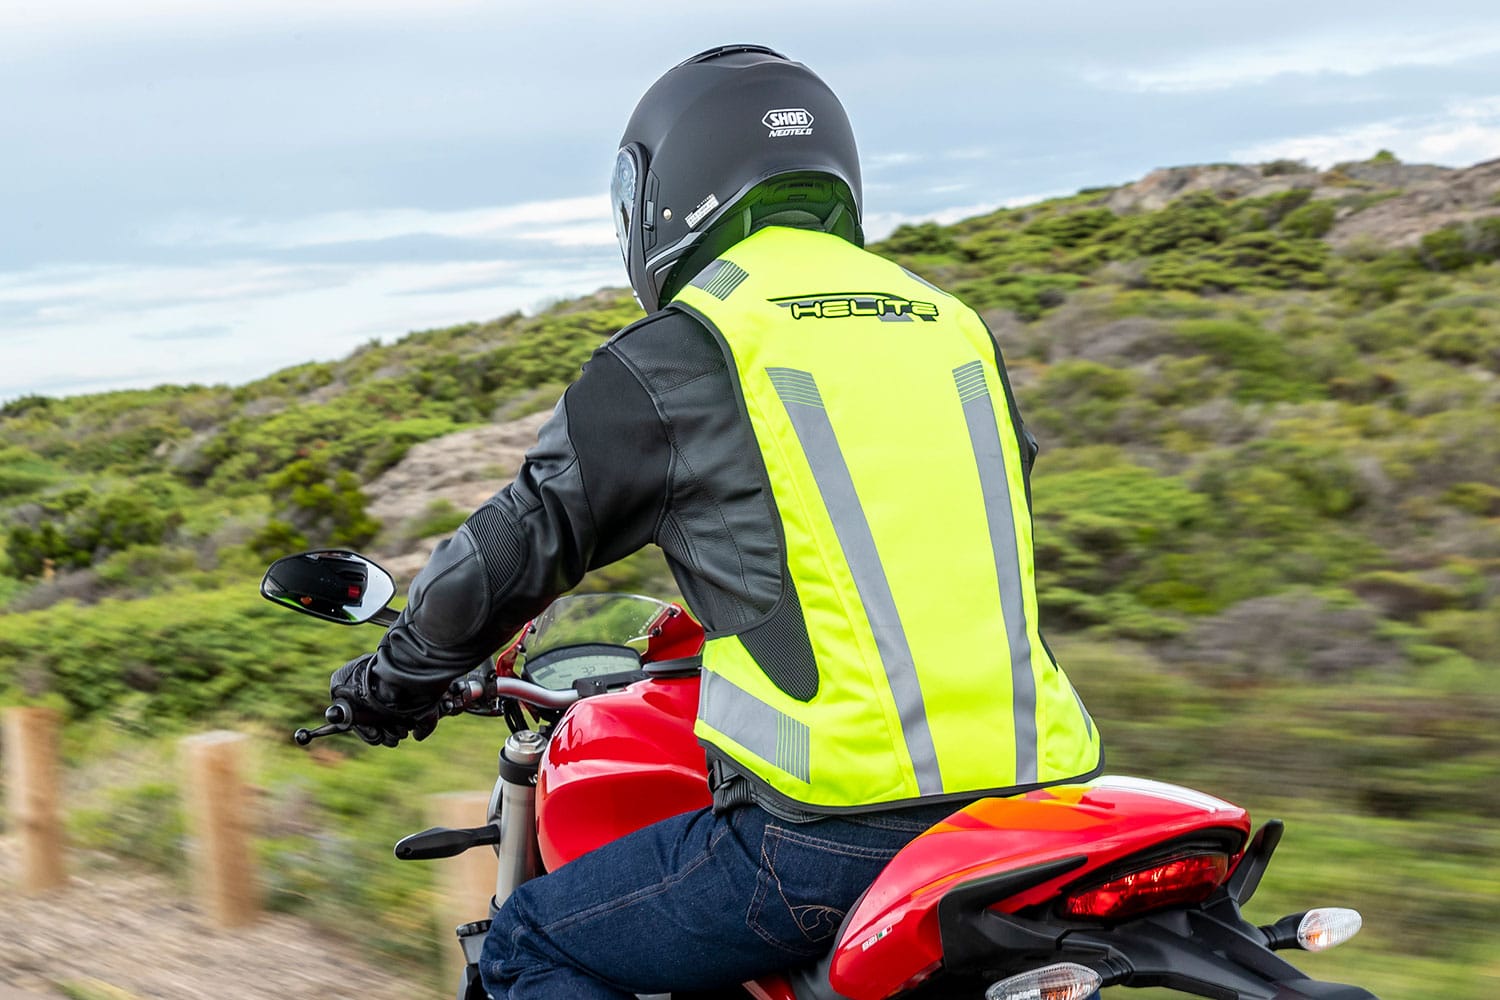 Biker wearing a Turtle 2 safety vest on motorbike rear view Hi Vis